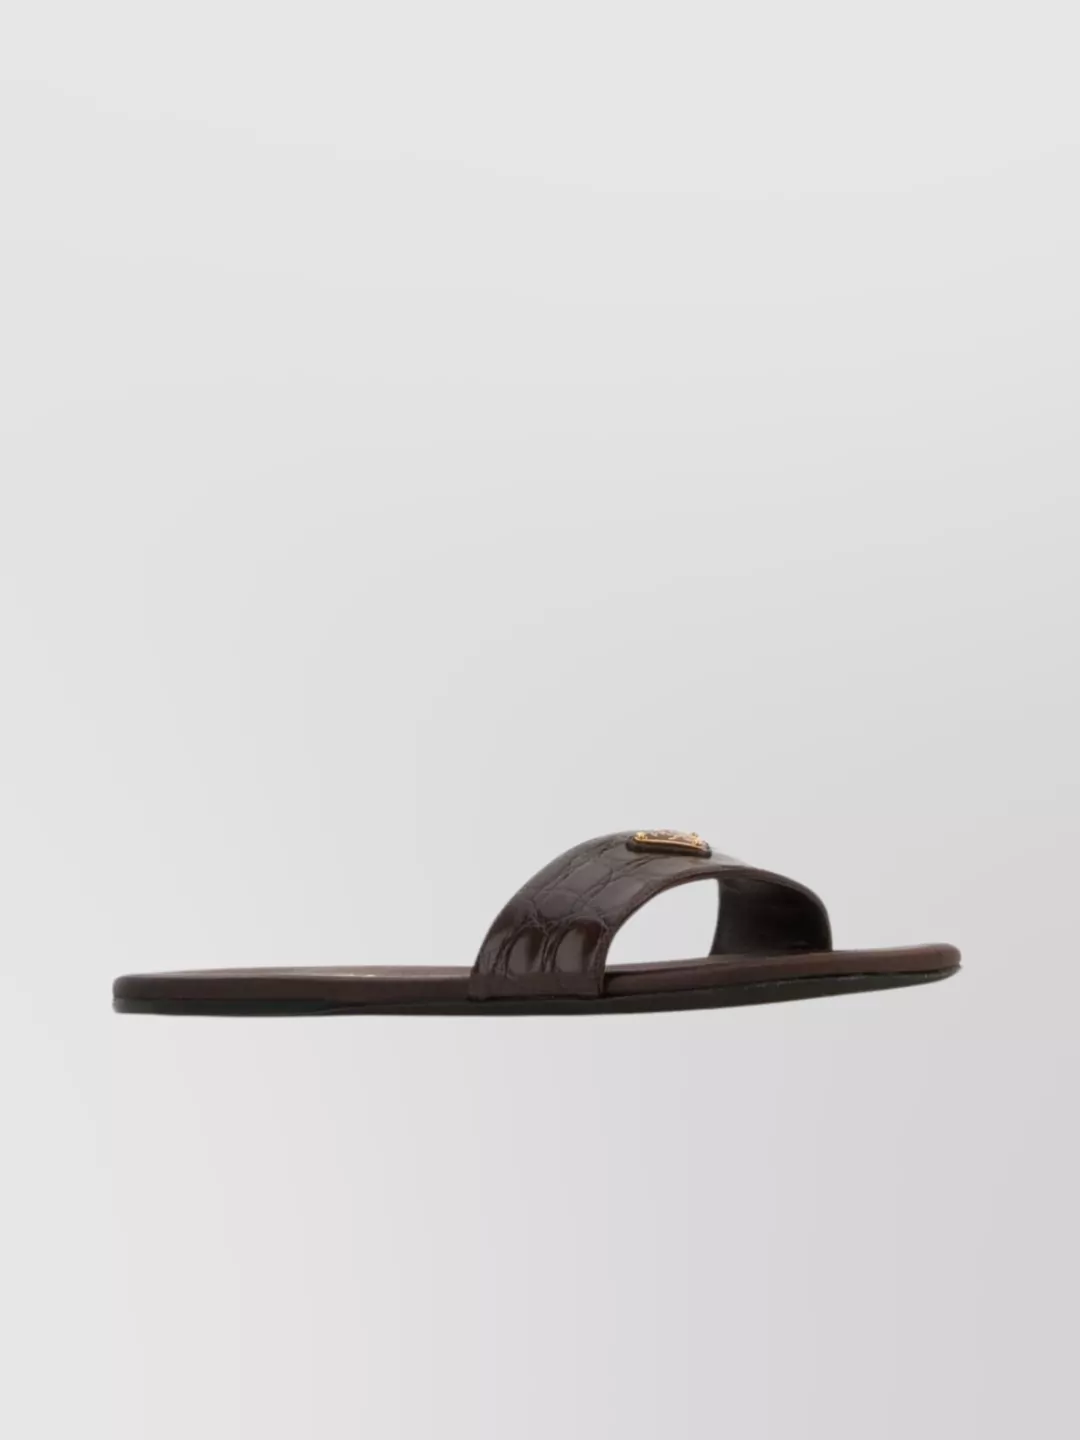 Prada Sandals Leather Embellishment Flat Sole Toe Post